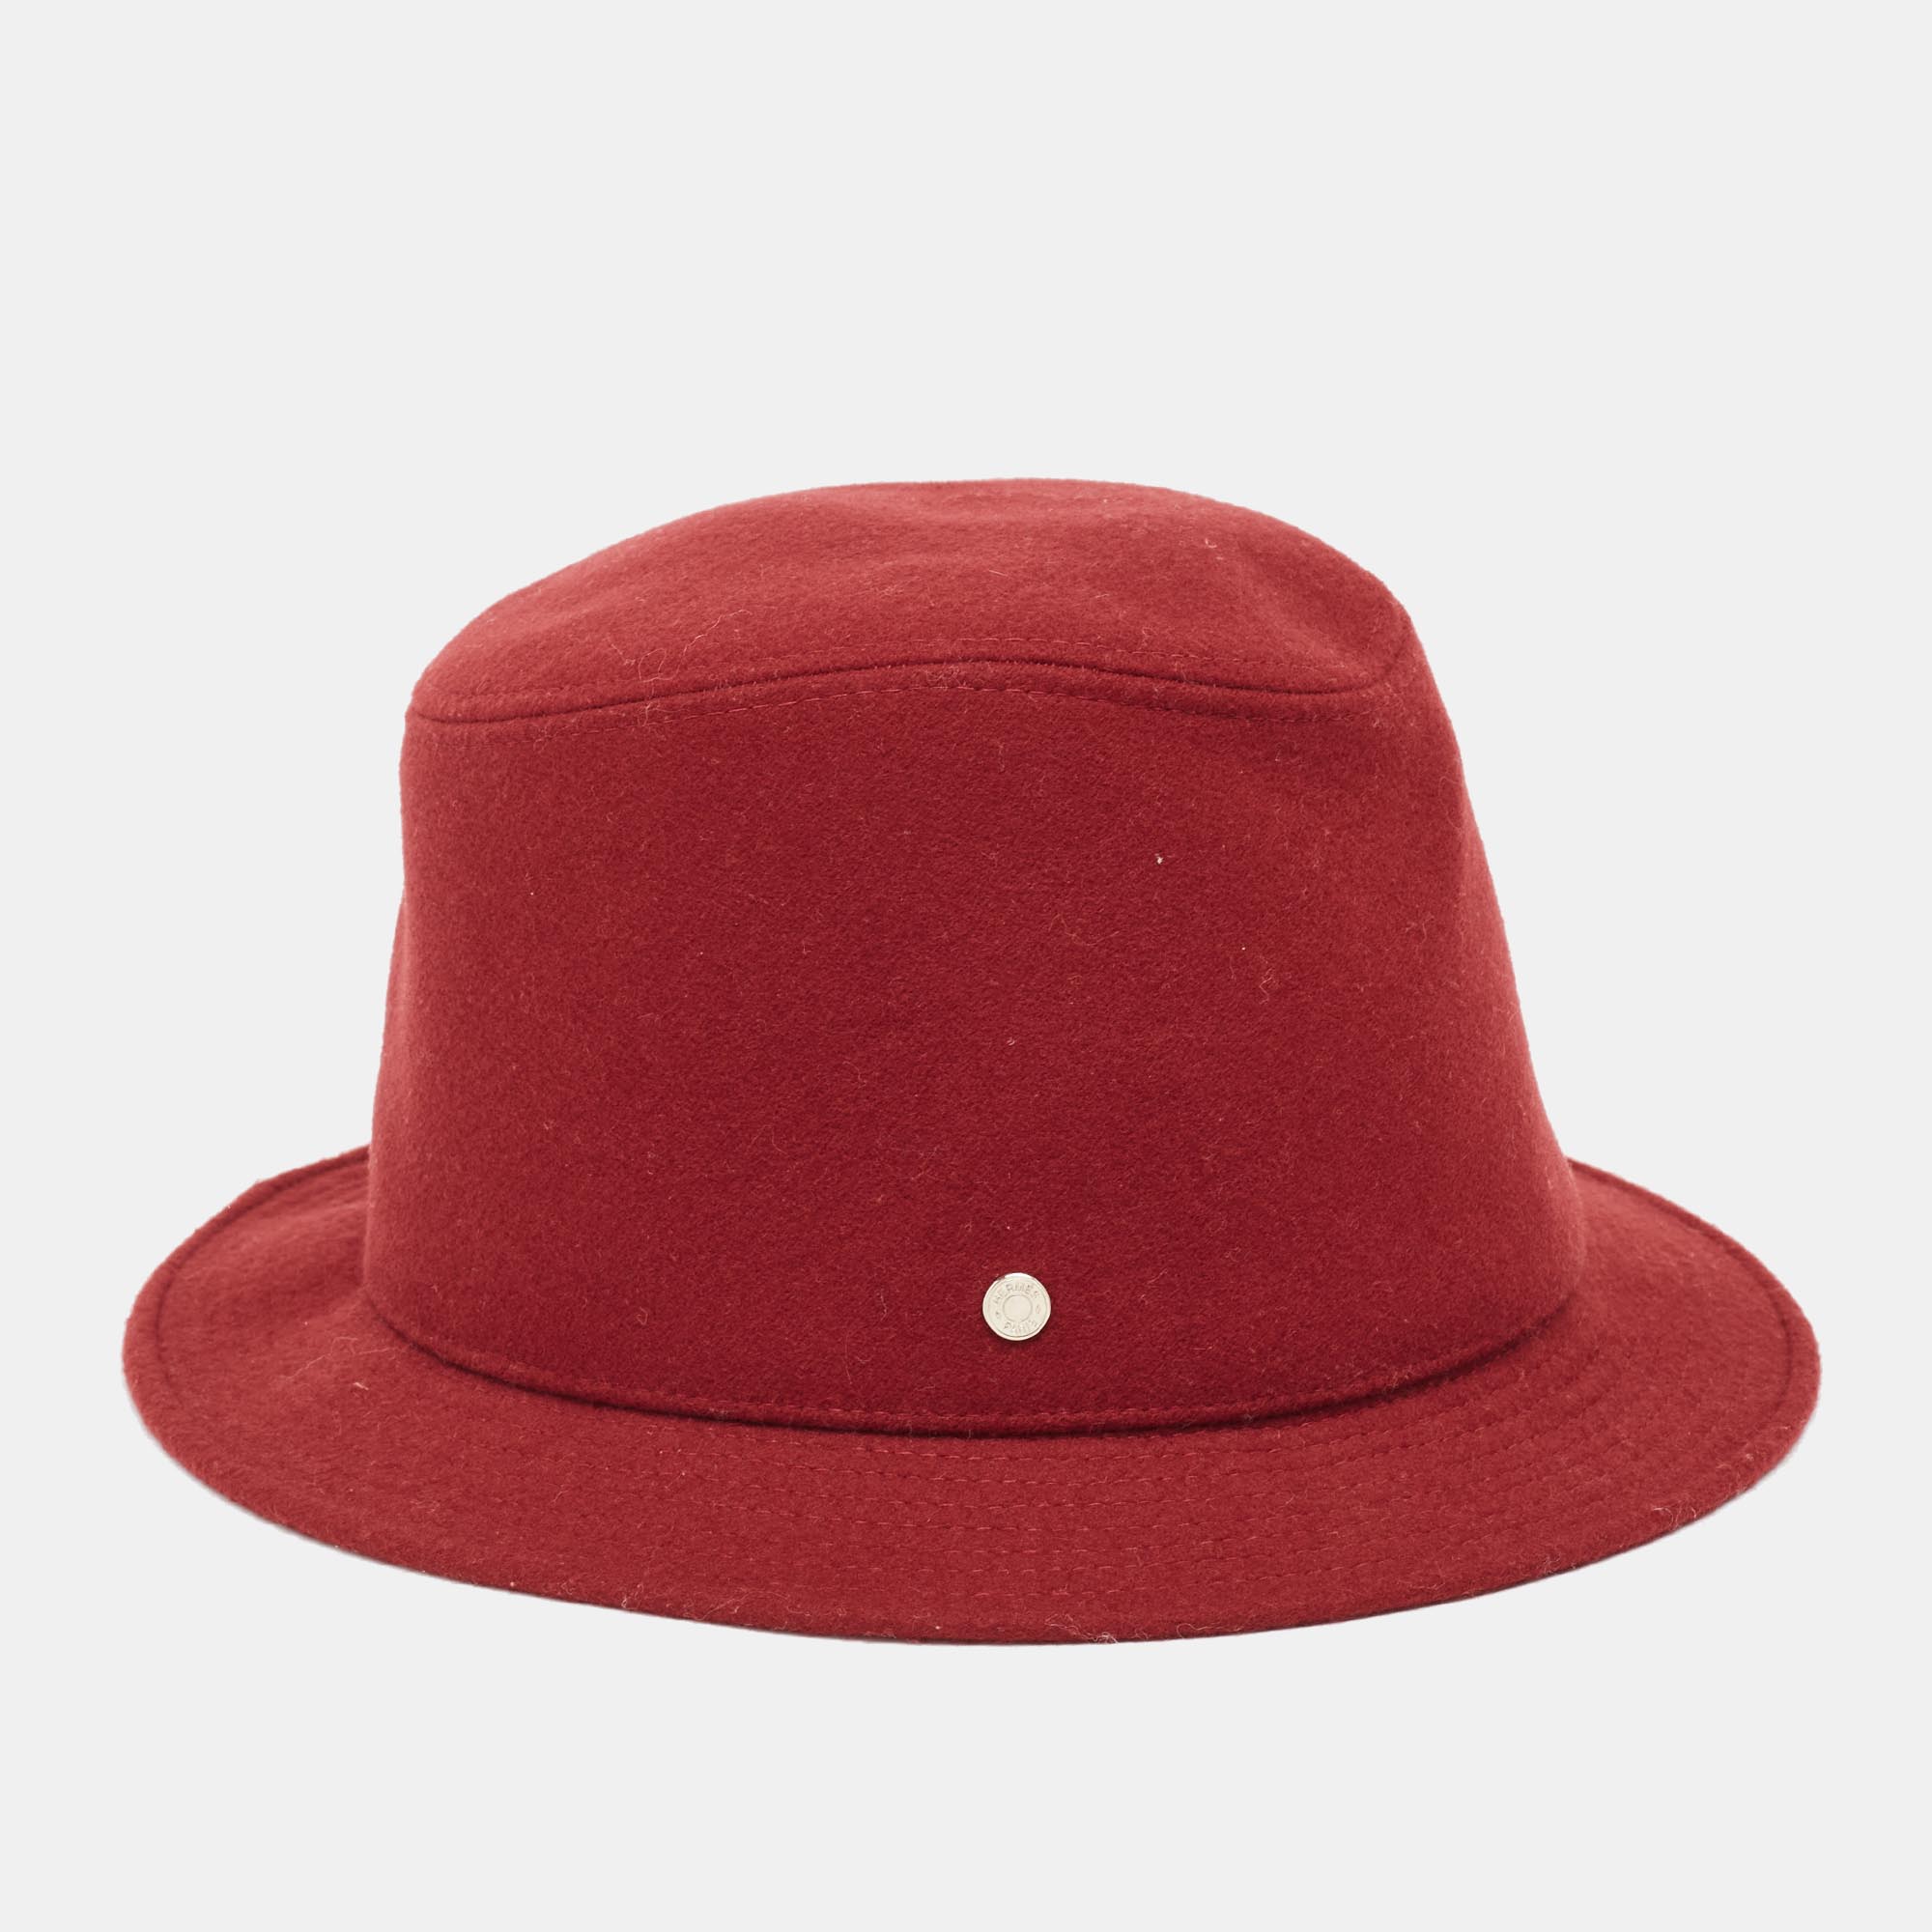 Hermes red cashmere calvi bucket hat size 57